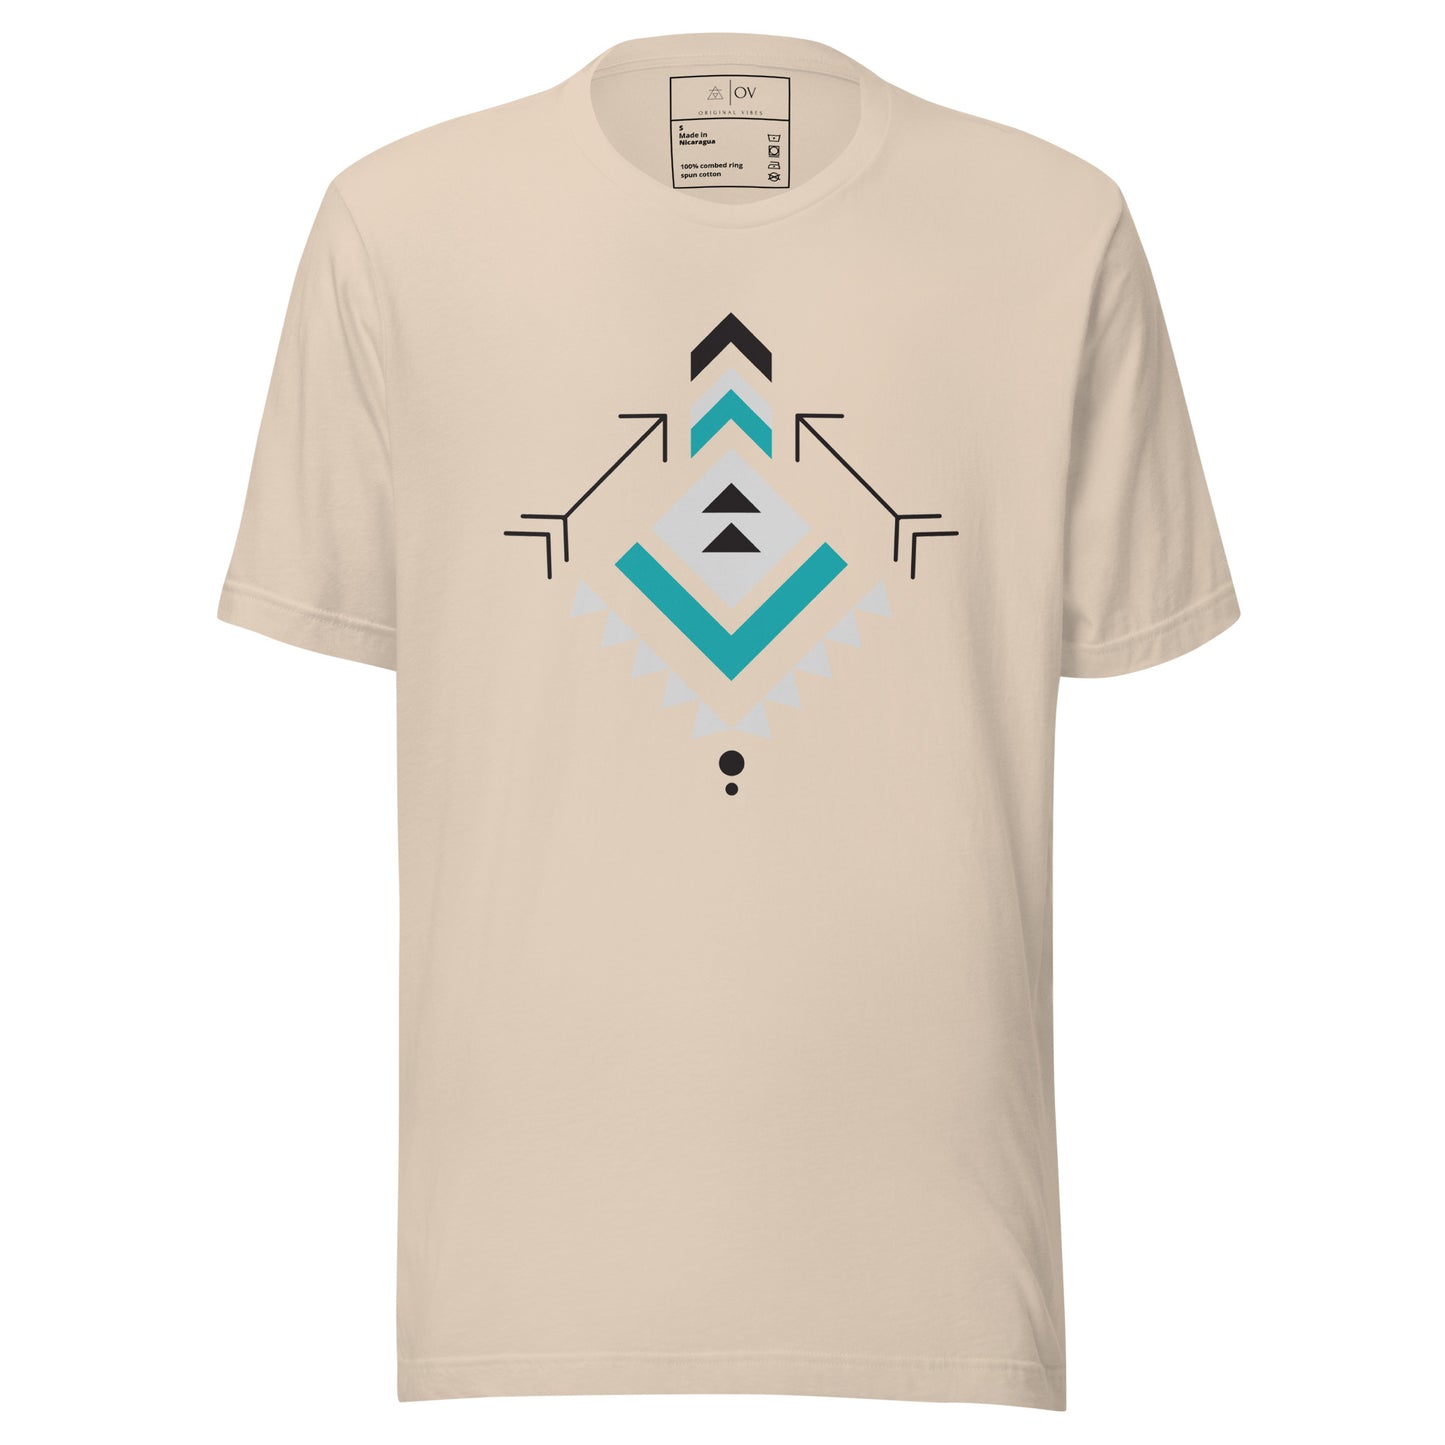 Navajo unisex t-shirt